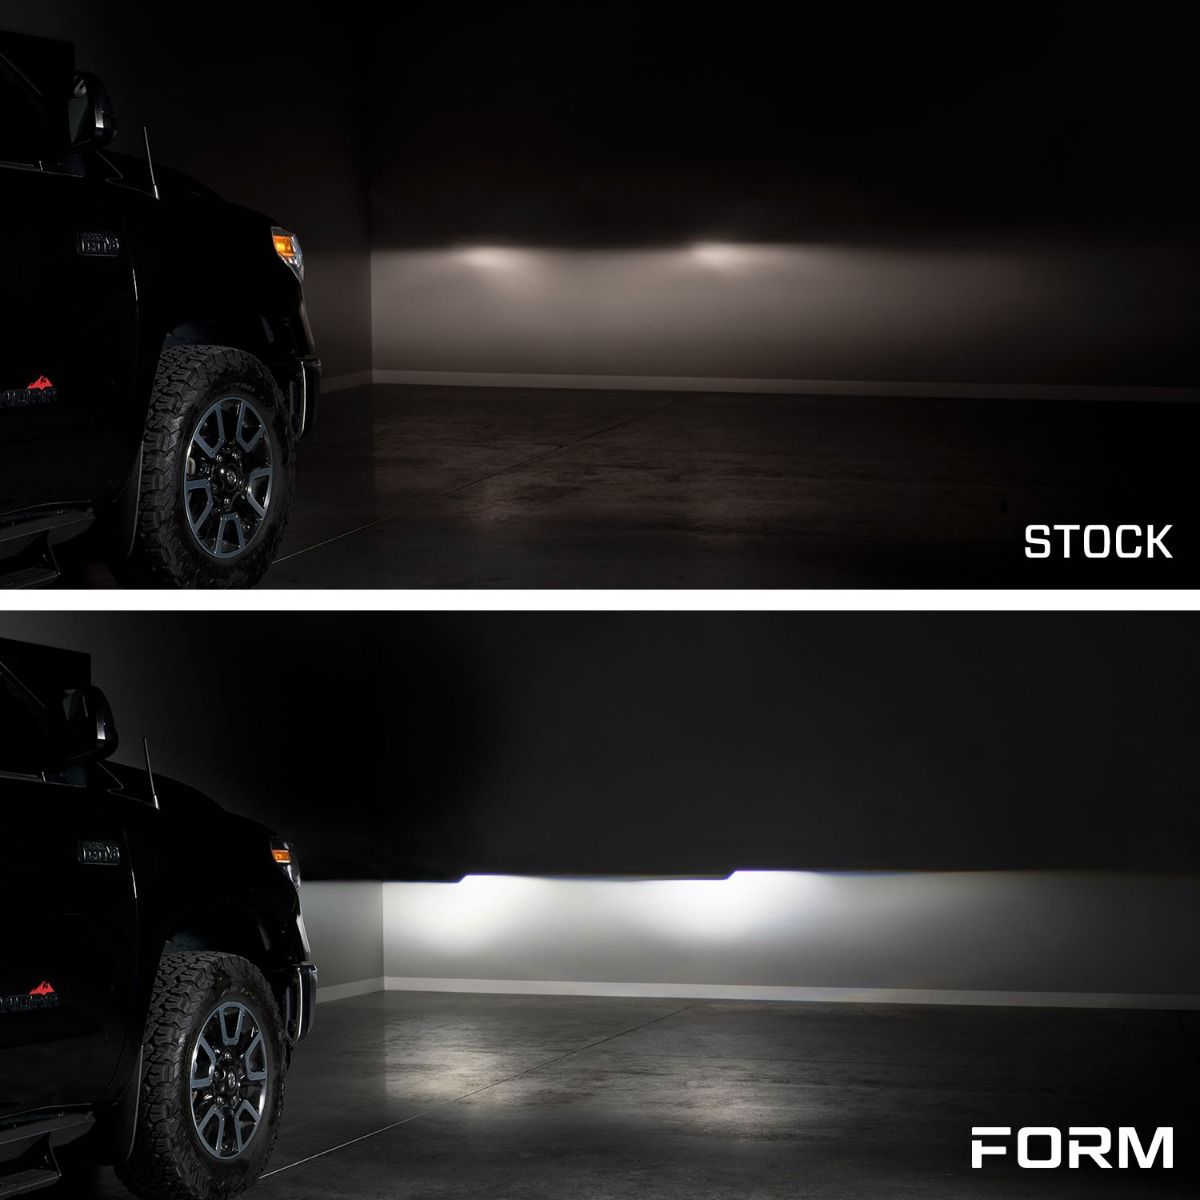 2014-2021 Toyota Tundra LED Projector Headlights (pair)